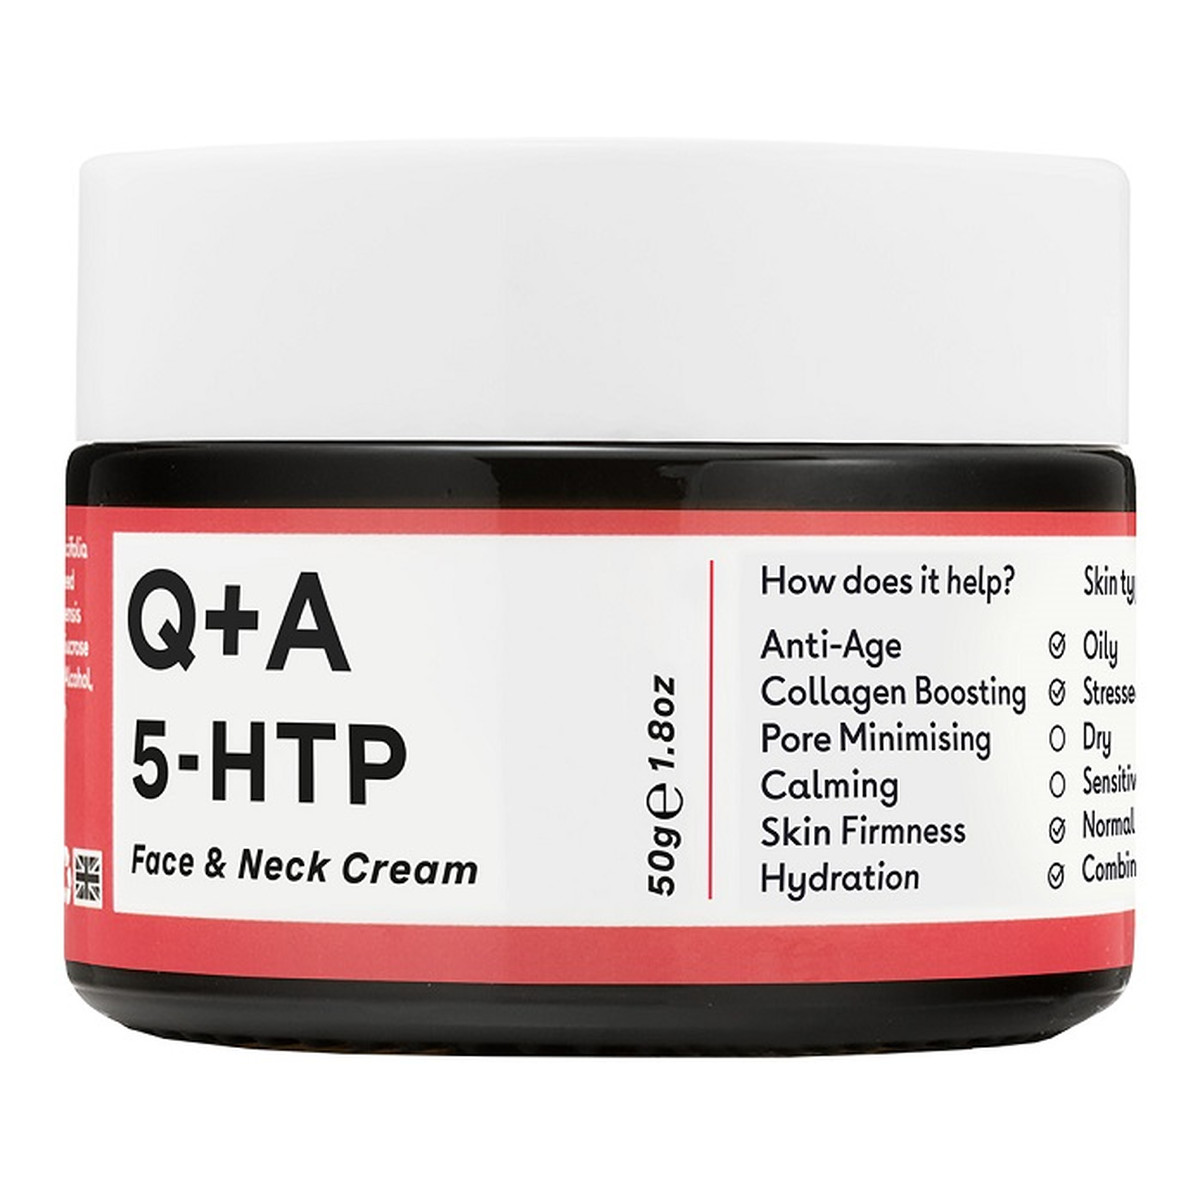 Q+A 5-HTP Elasticity Face & Neck Cream ujędrniający Krem do twarzy i szyi z suplementem 5-htp 50g 50g